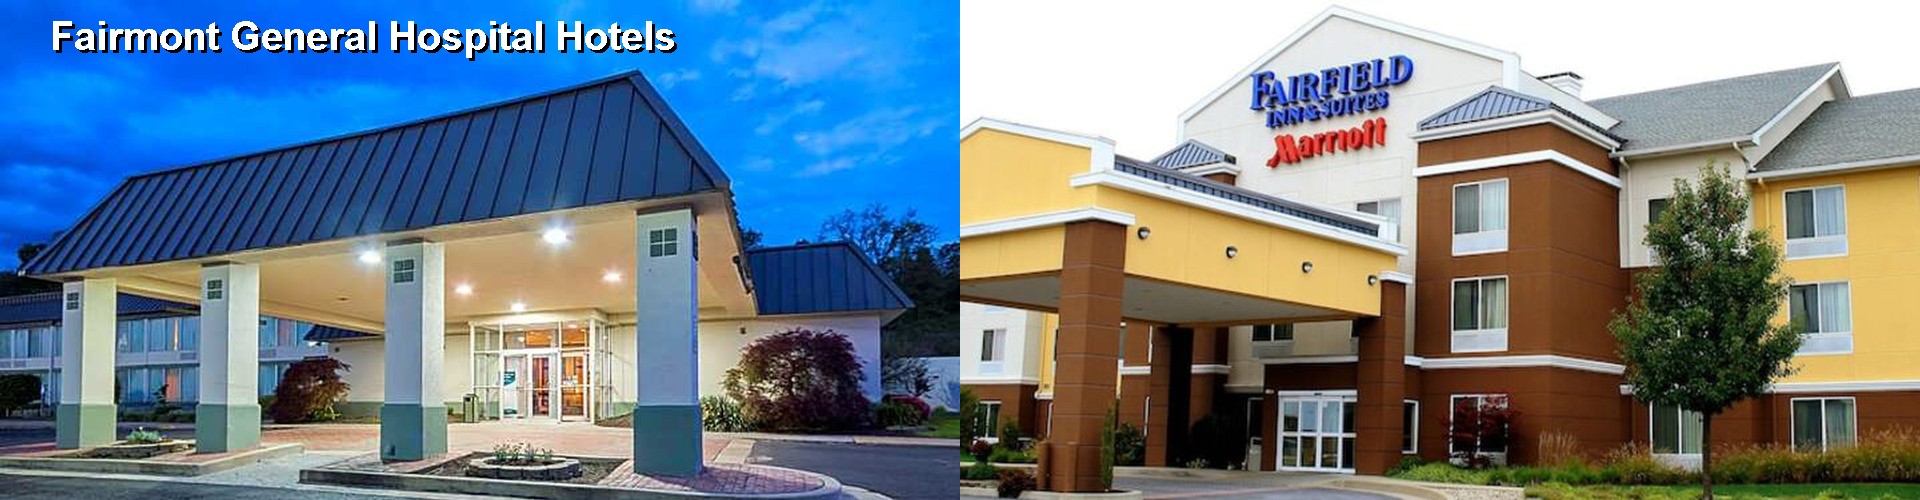 5 Best Hotels near Fairmont General Hospital